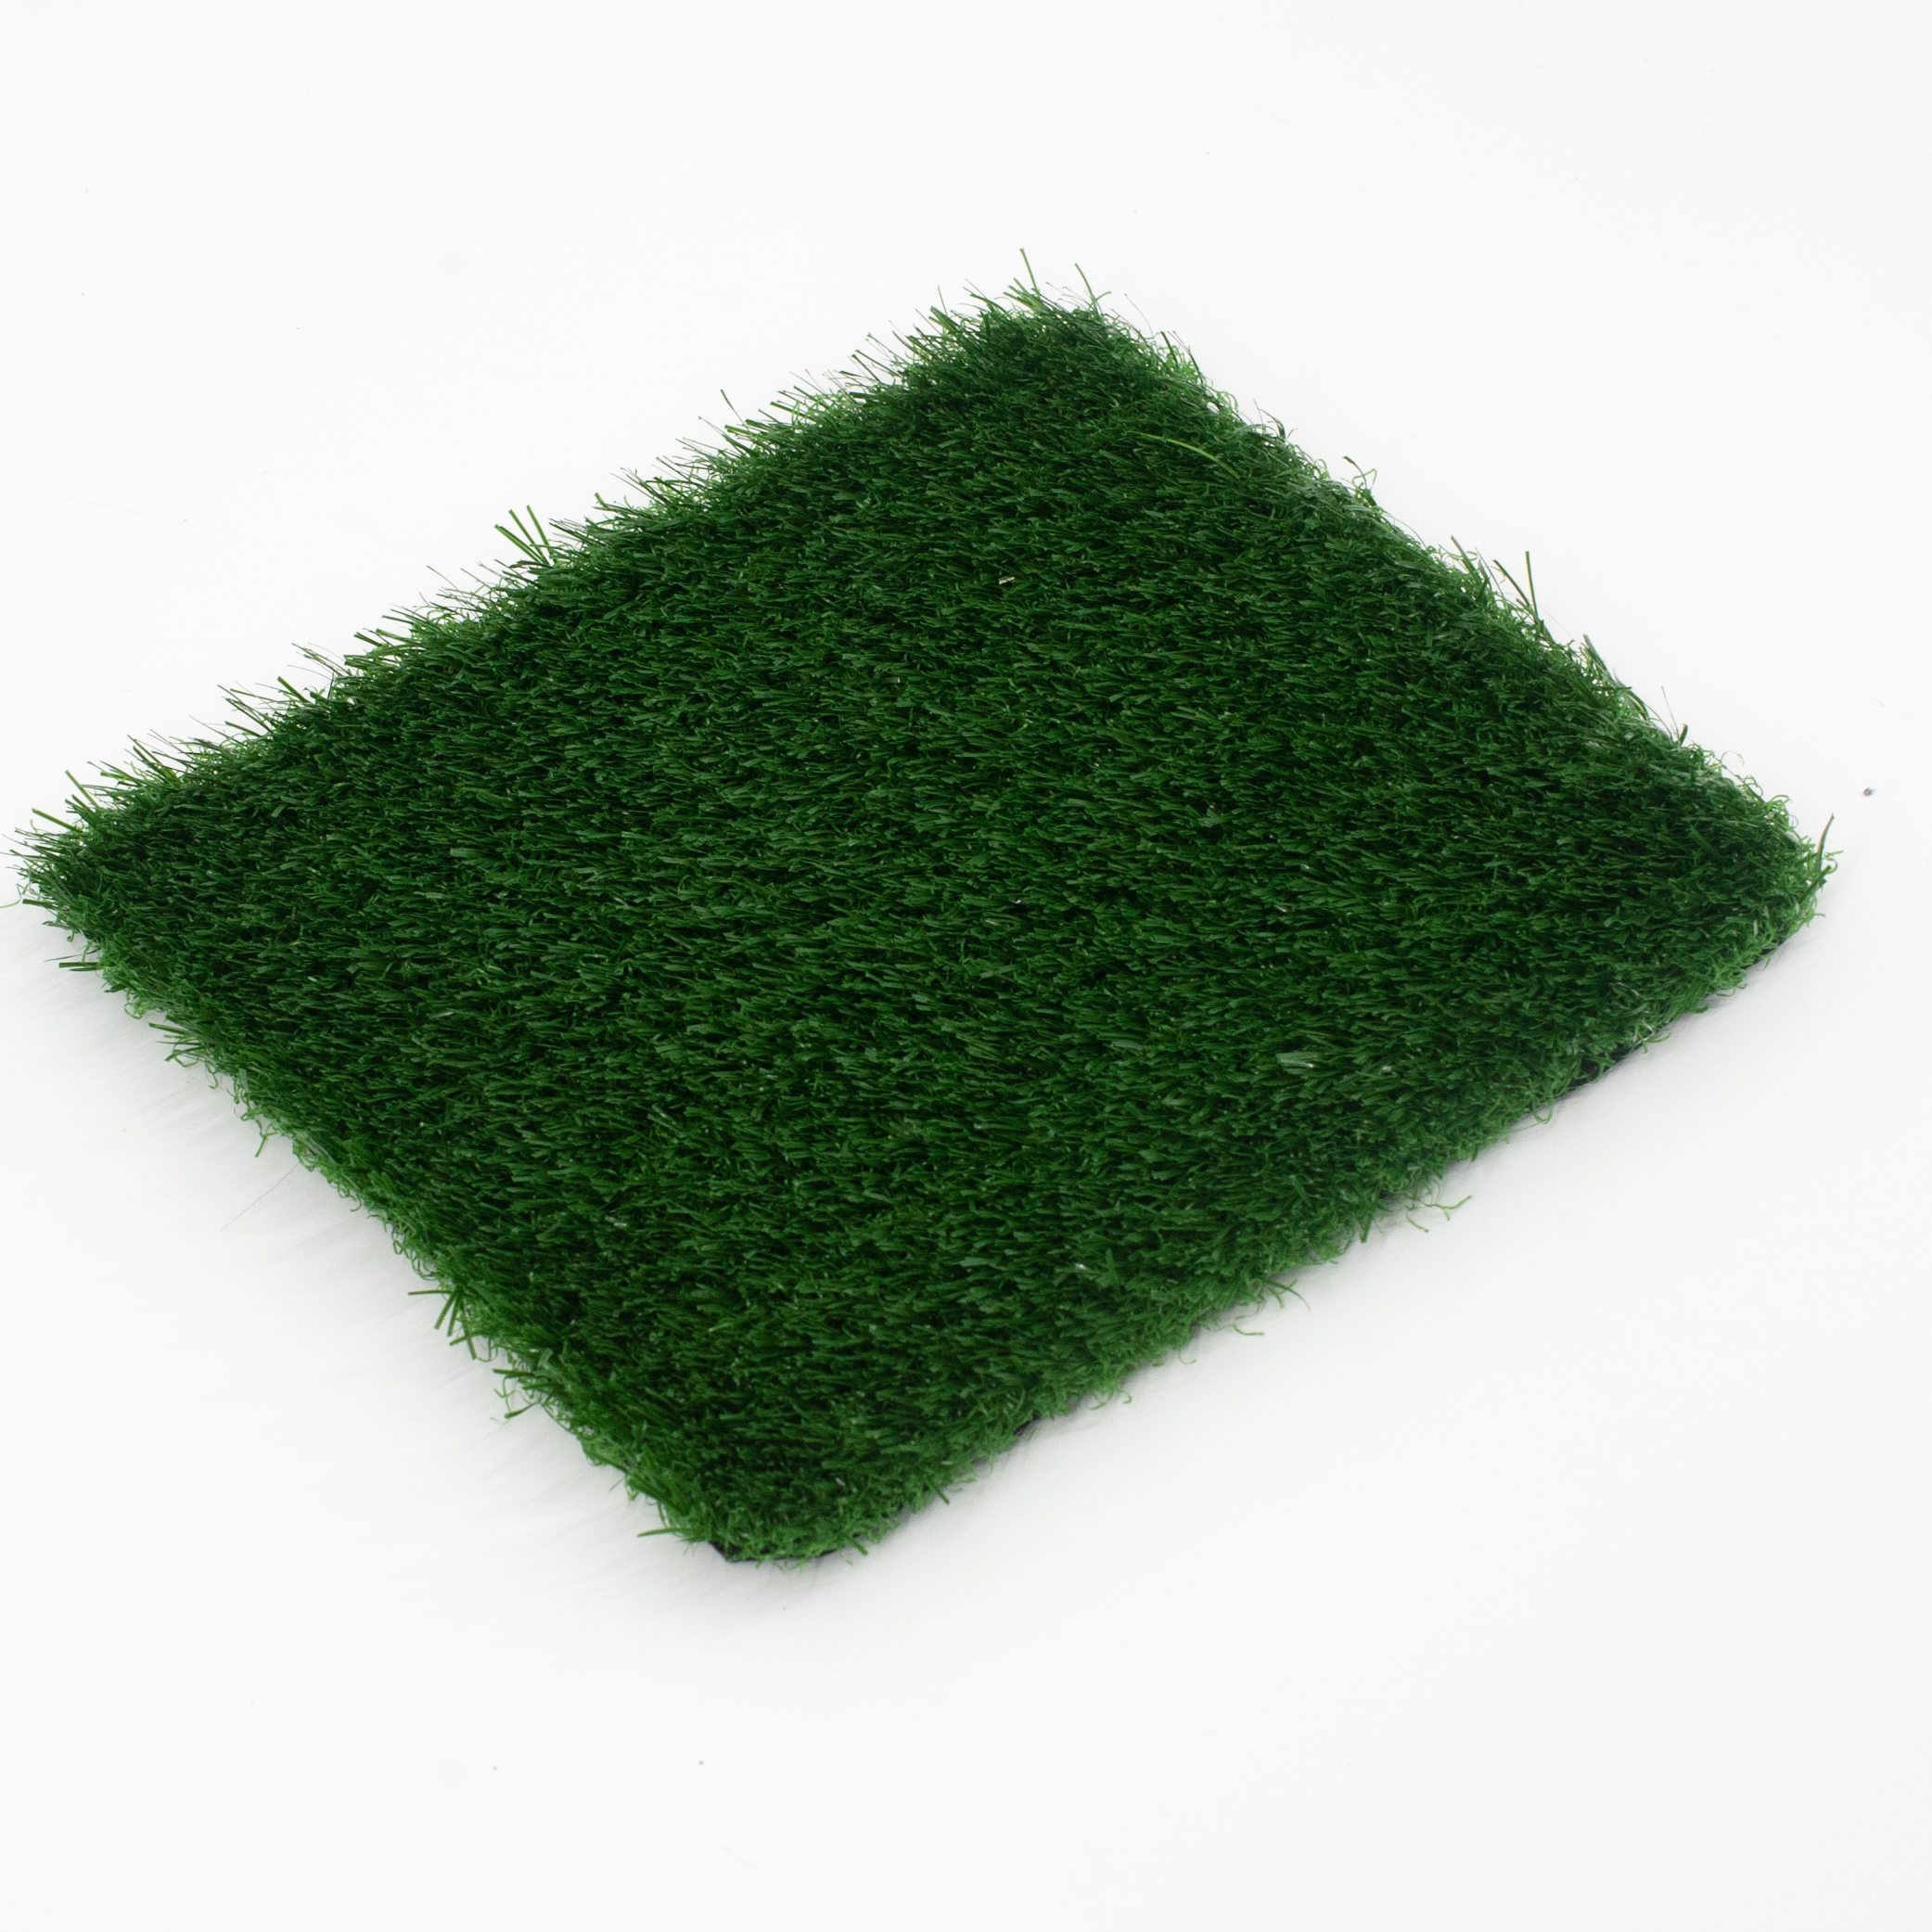 10mm High Quality Artificial Grass for backyard